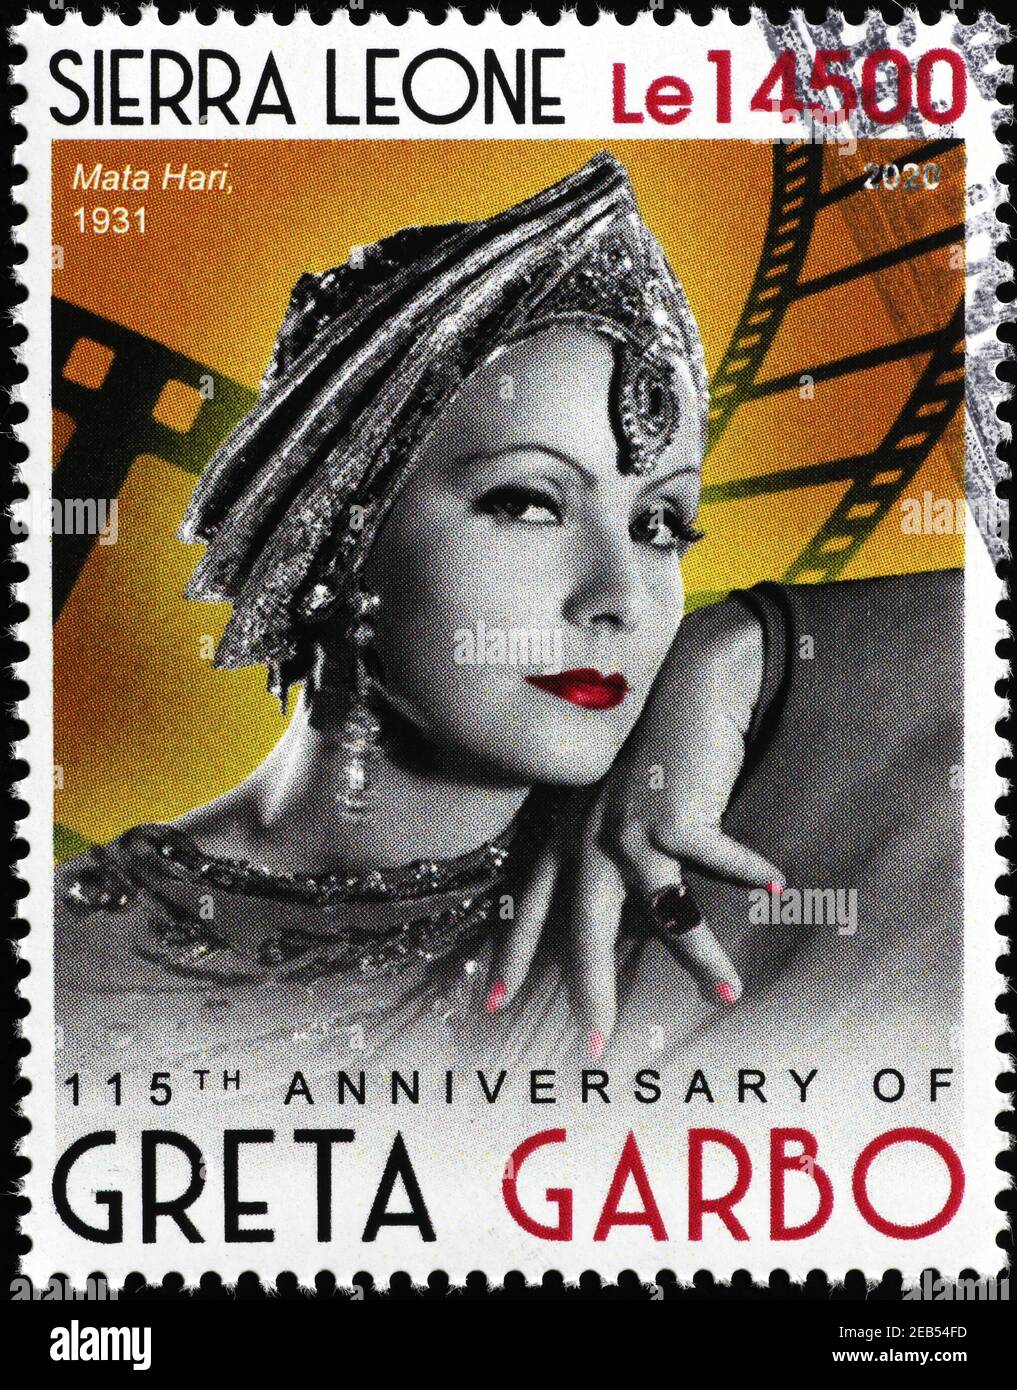 Greta Garbo on african postage stamp Stock Photo